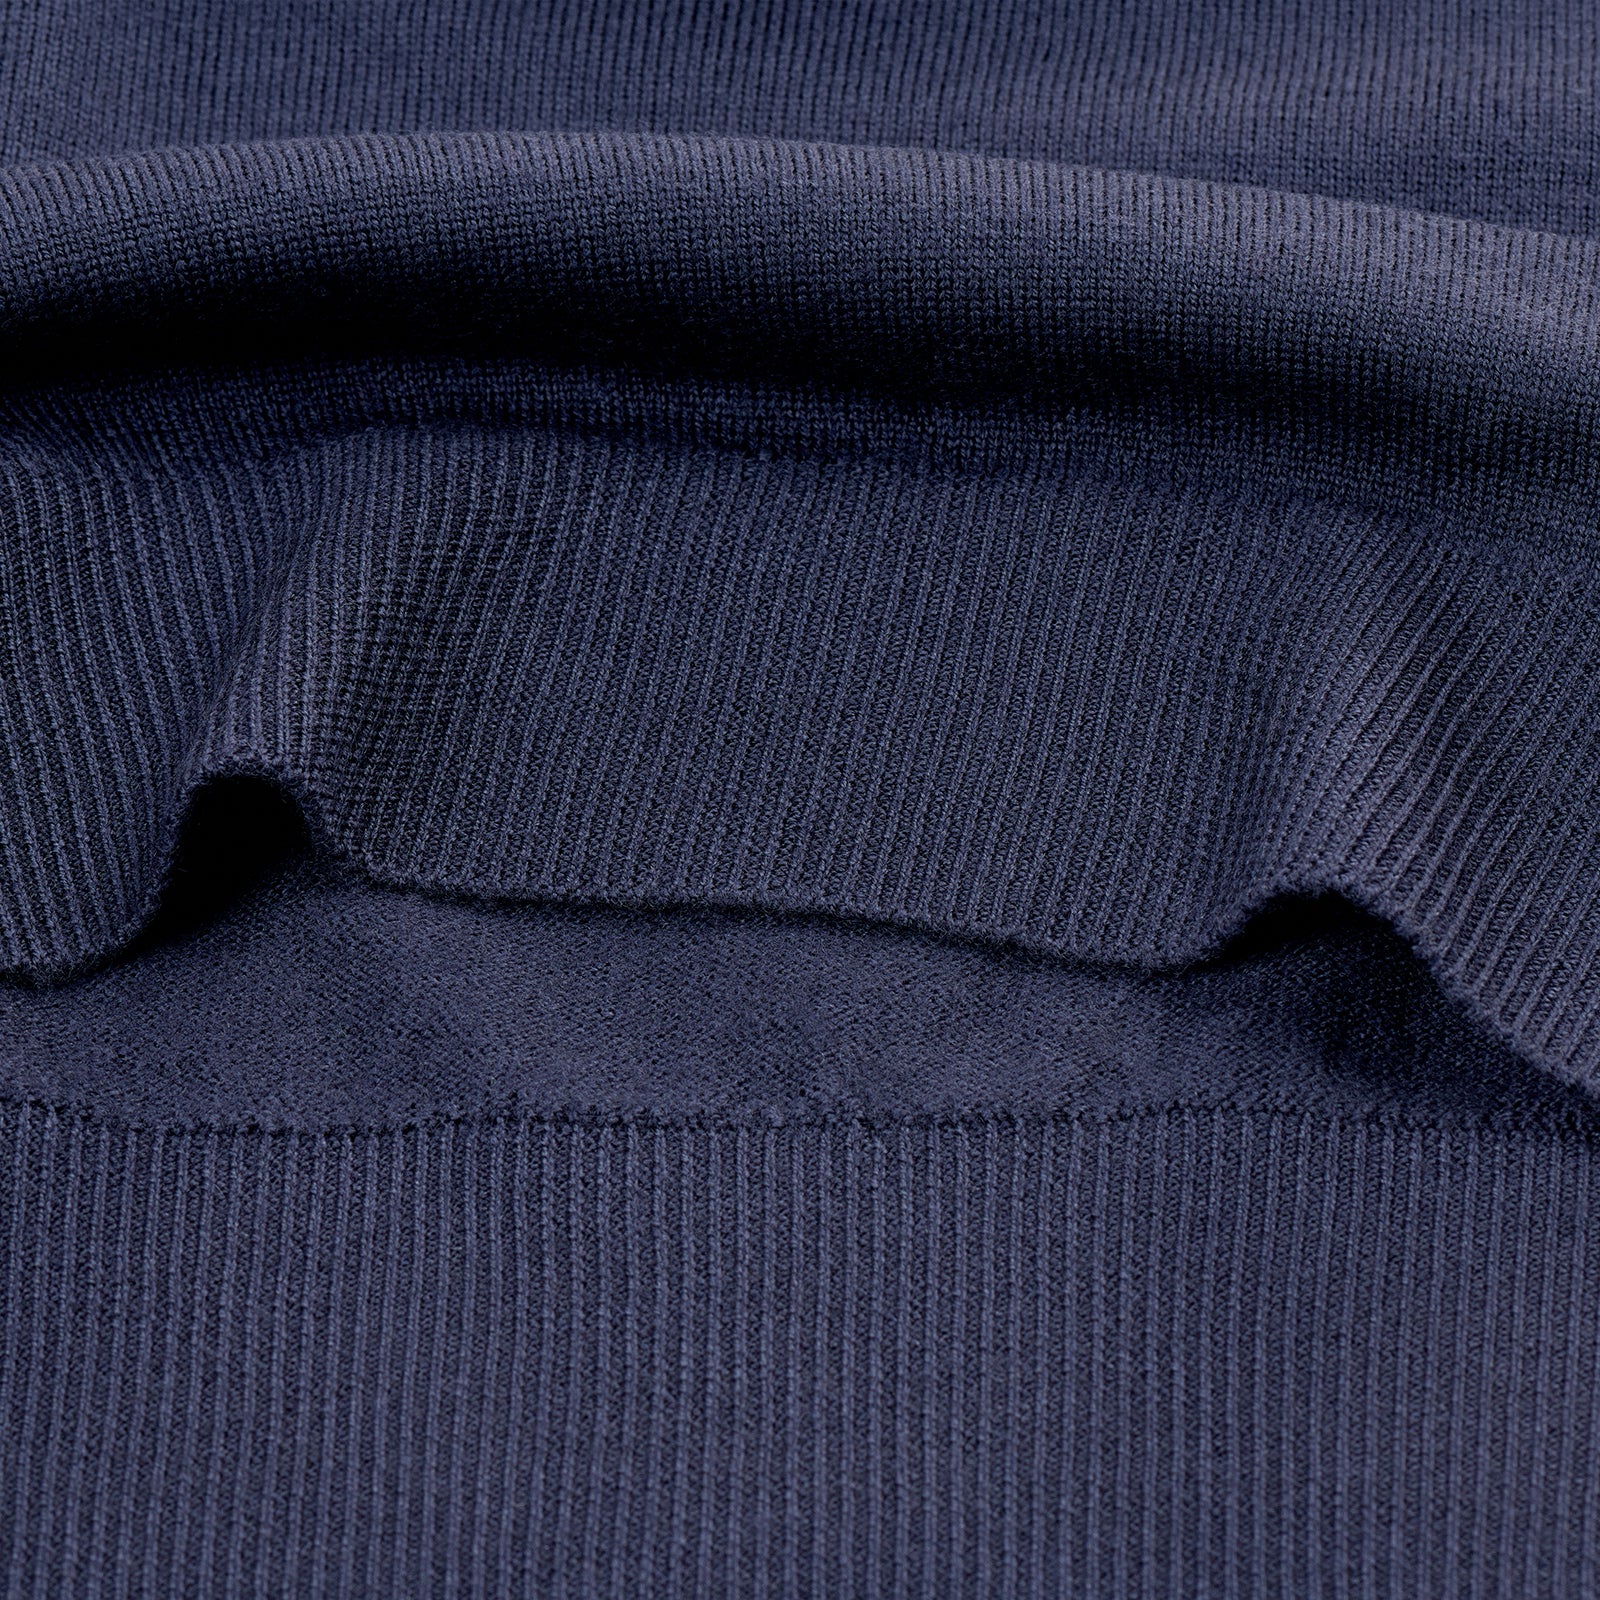 Midnight Merino Wool 3-Button Polo Shirt